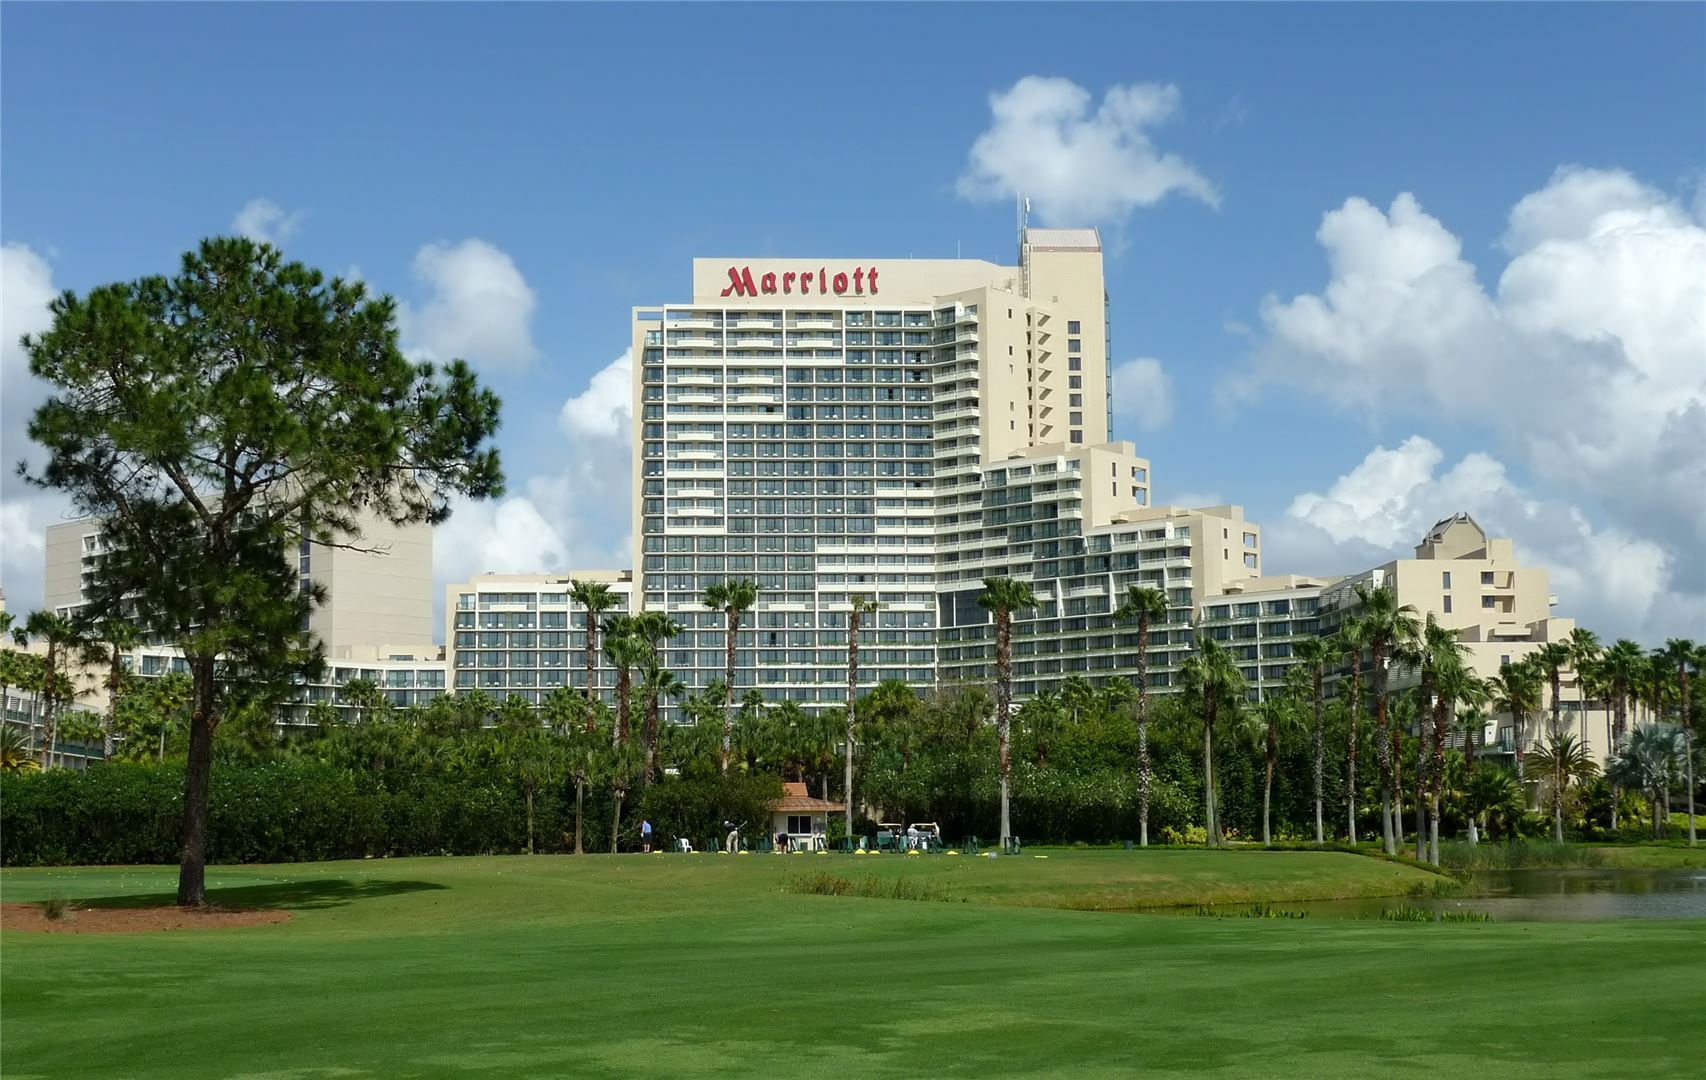 Join Marriott's Hotel Excellence! Training Program